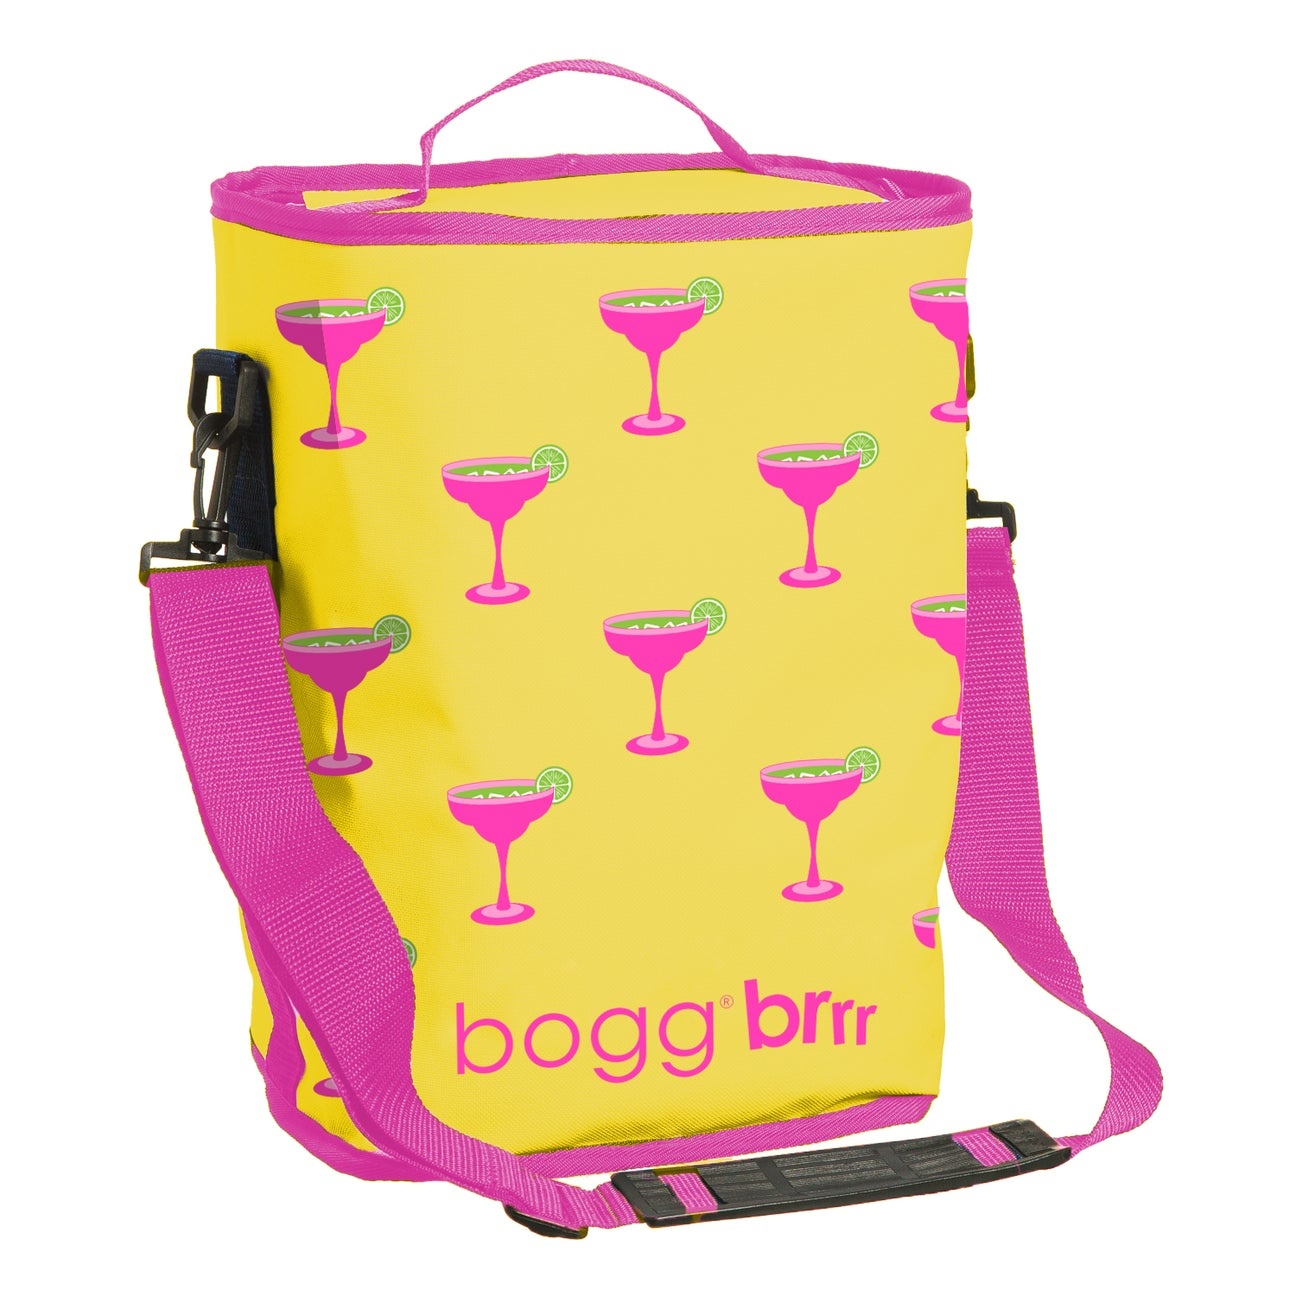 Beach Bag Divider Tray for Bogg Bag Original Accessories for Bogg